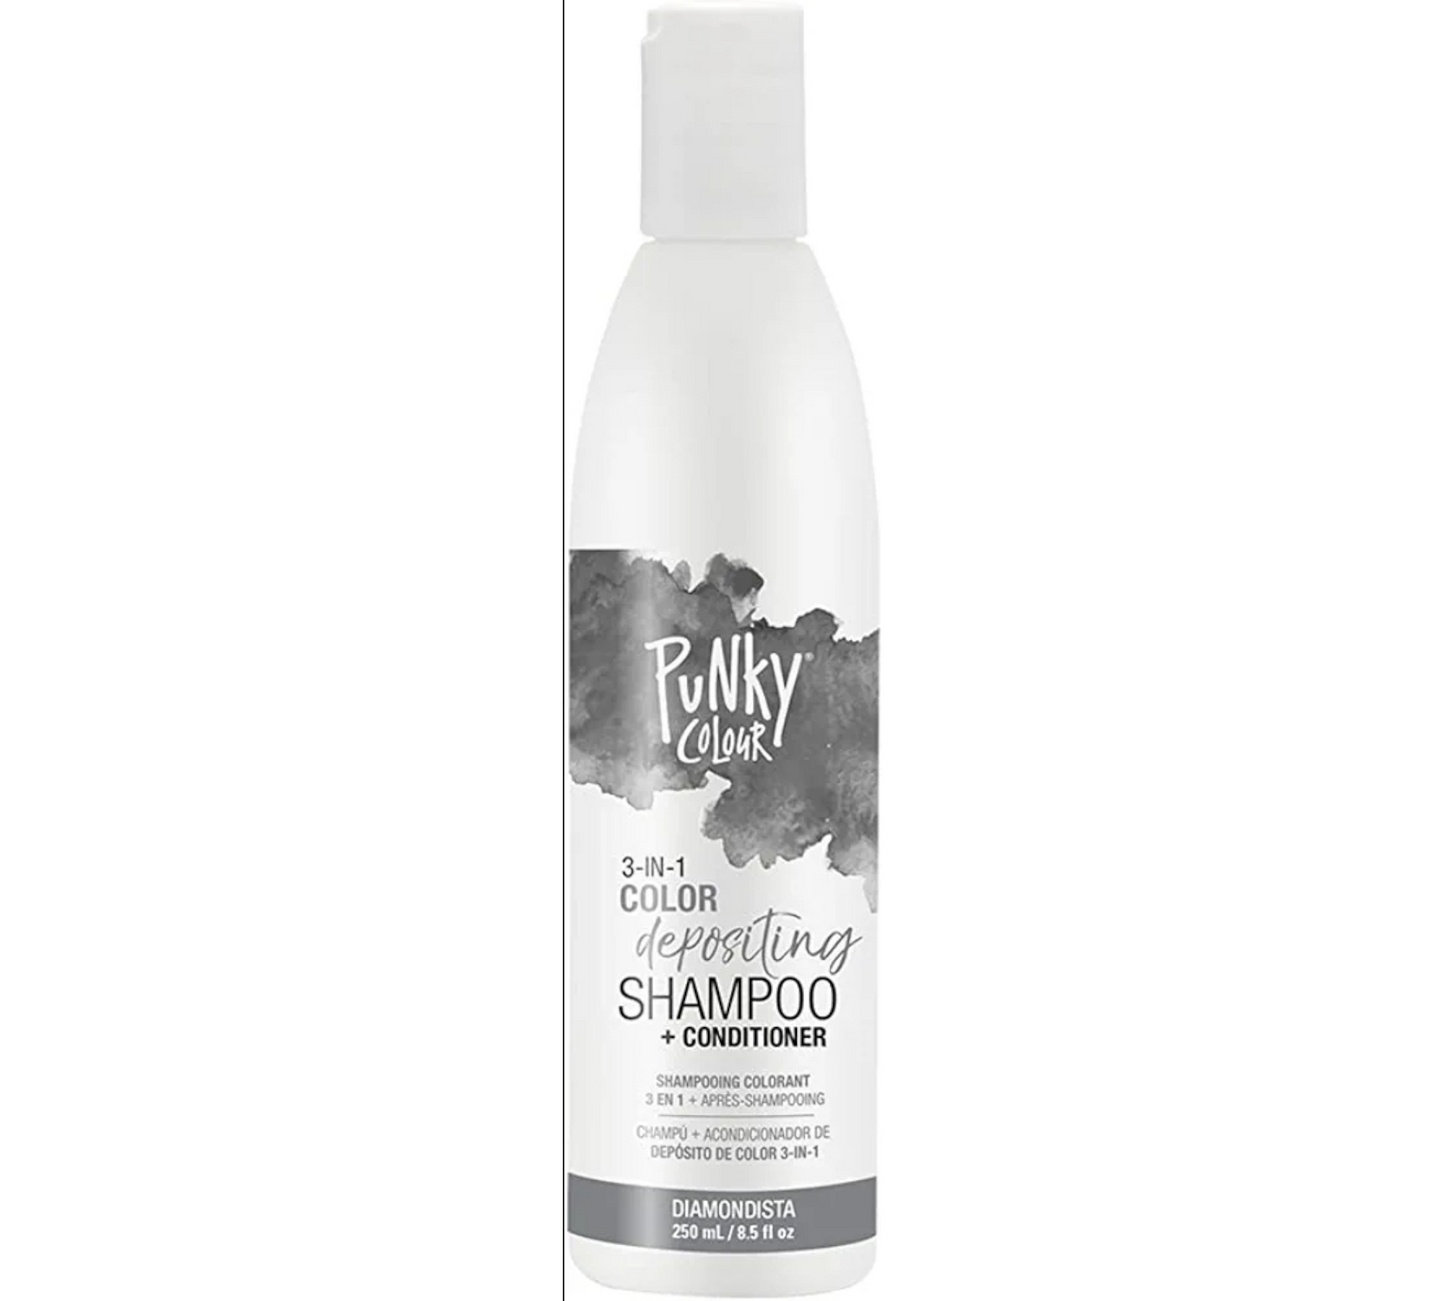 Punky Color Cupid Beauty Supplies Diamondista / 8.5 Fl.Oz Temporary Color Shampoos 3-In-1 Color Depositing Shampoo + Conditioner